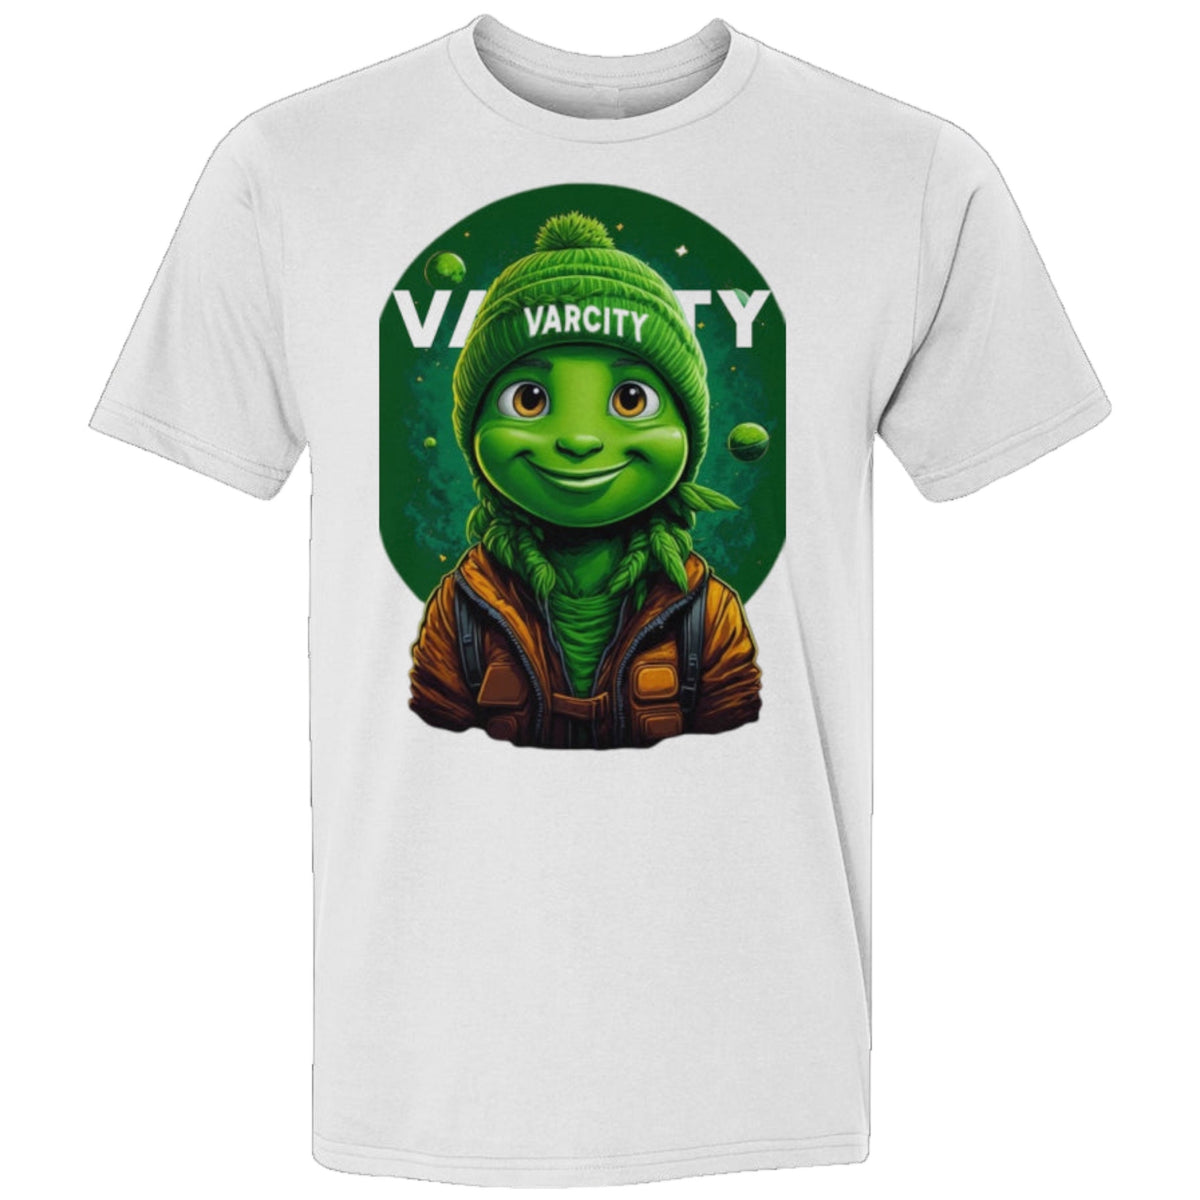 Varcity Wrld Green Boy Varcity Wrld ® Green Boy Tee White